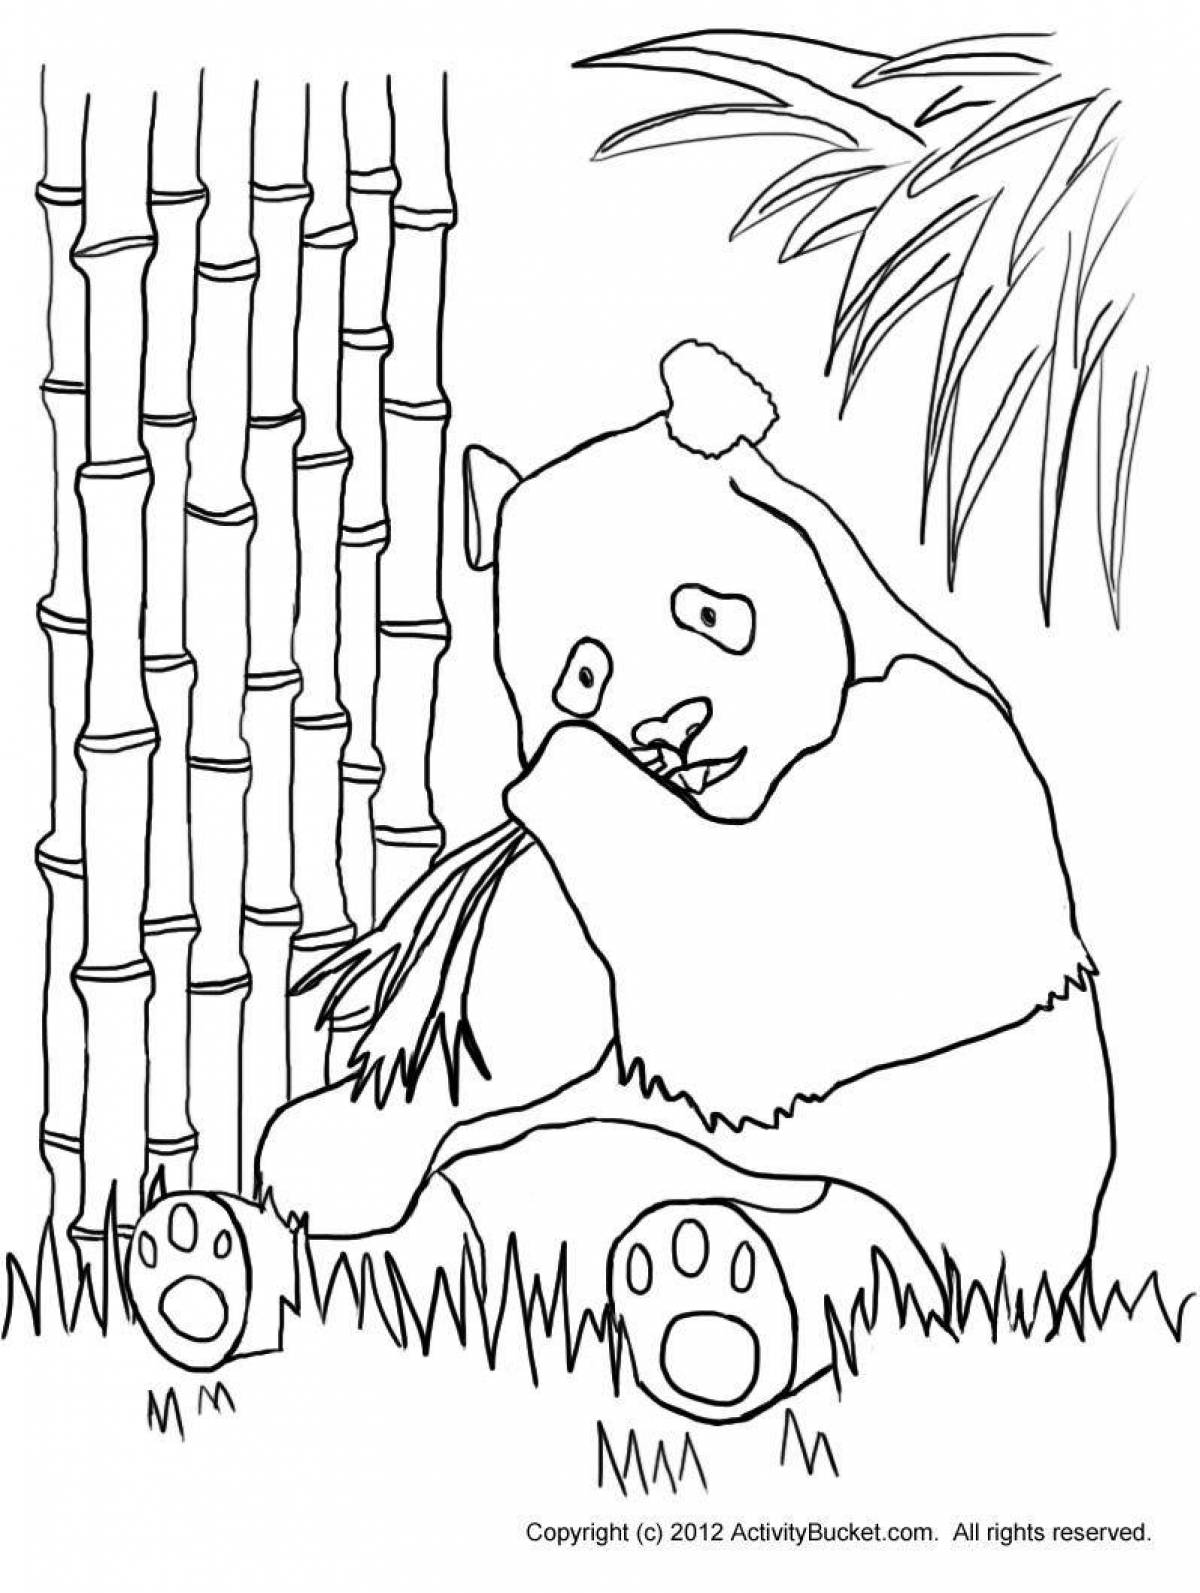 Incredible panda coloring book with bamboo